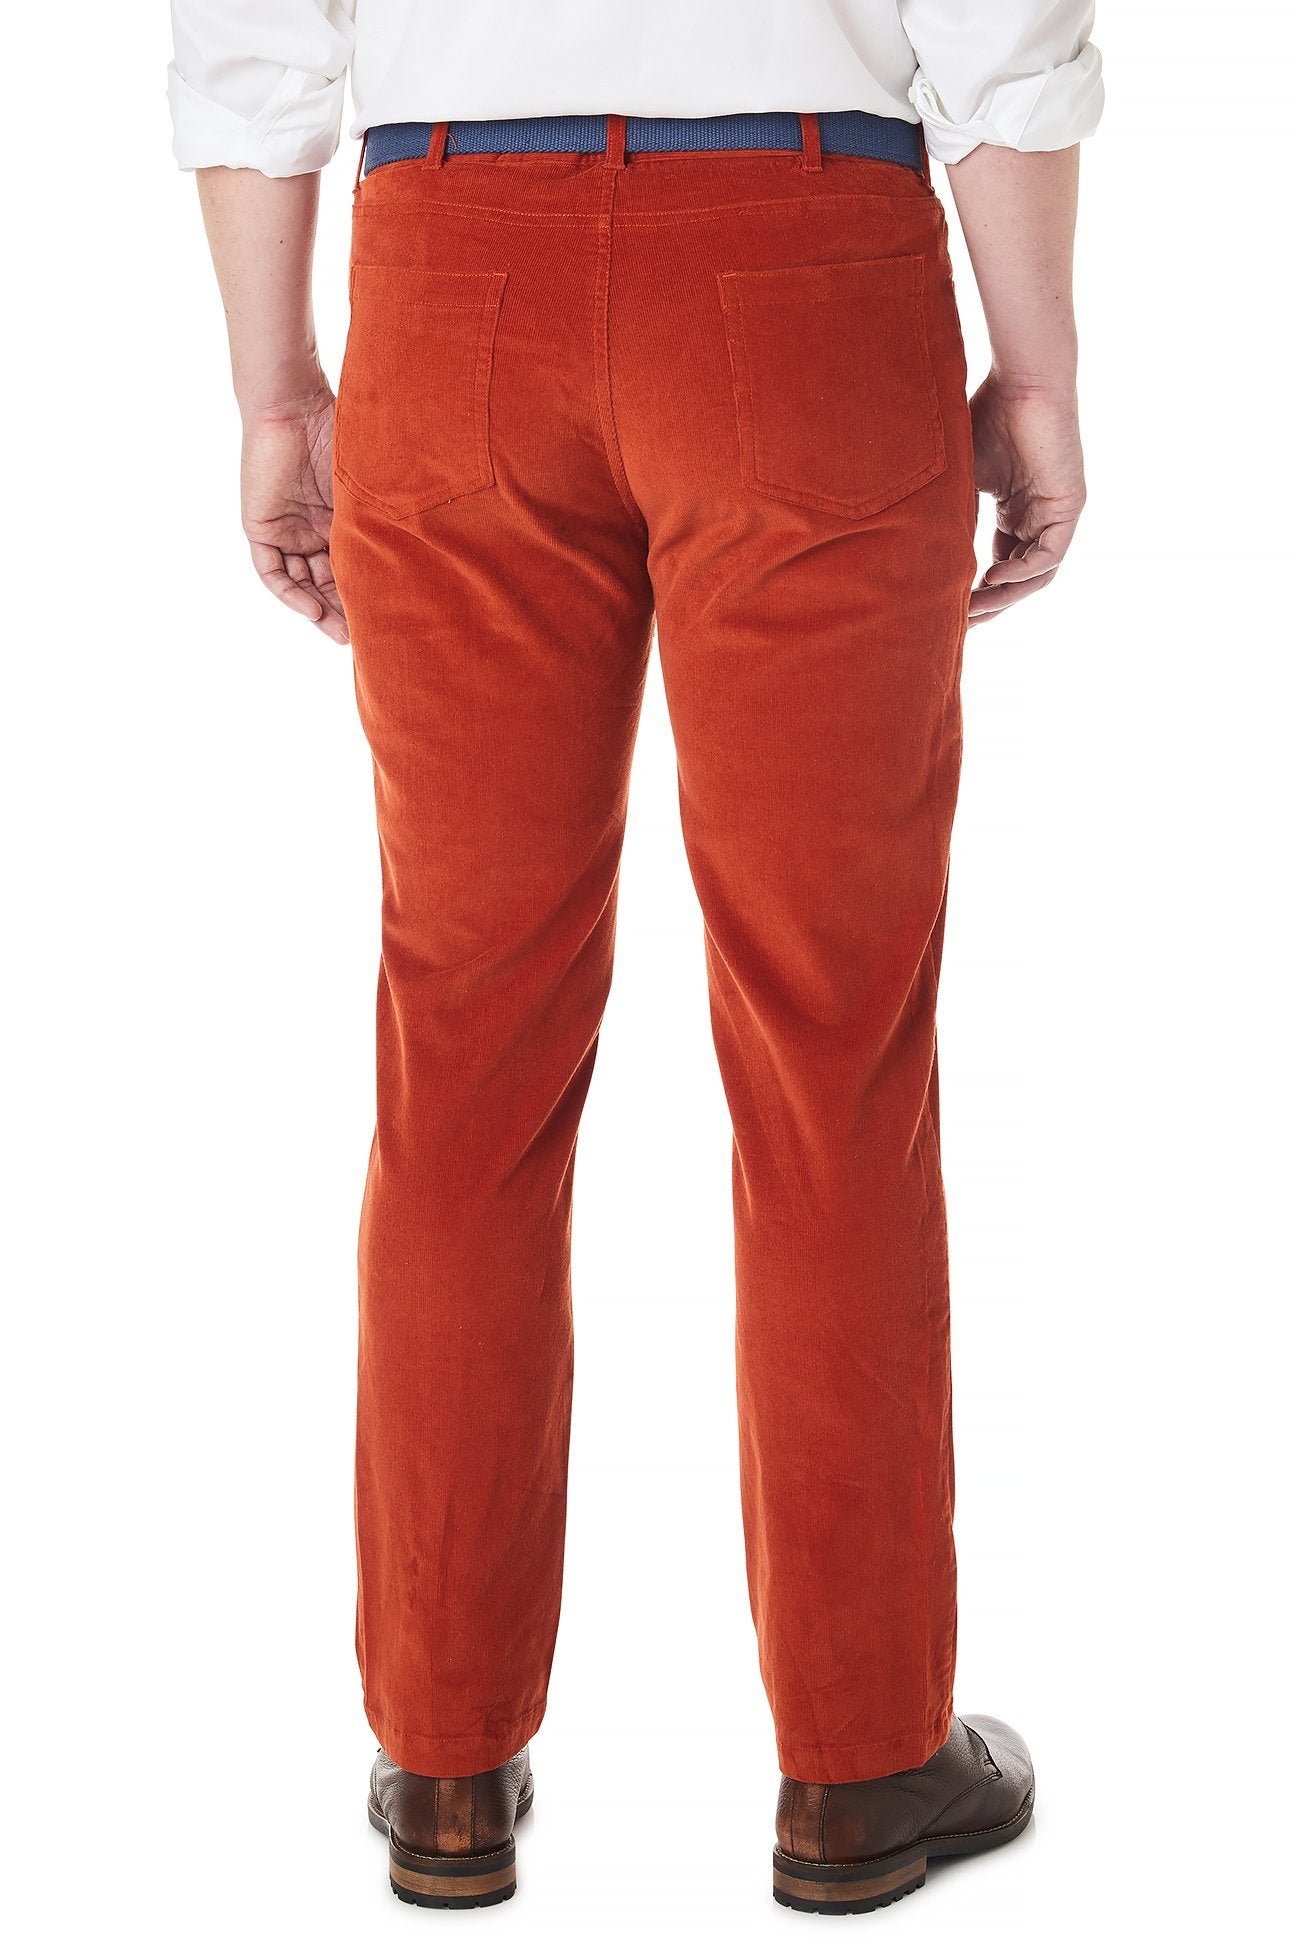 Castaway Mens 5-Pocket Pant Stretch Corduroy Orange Rust – Castaway  Nantucket Island